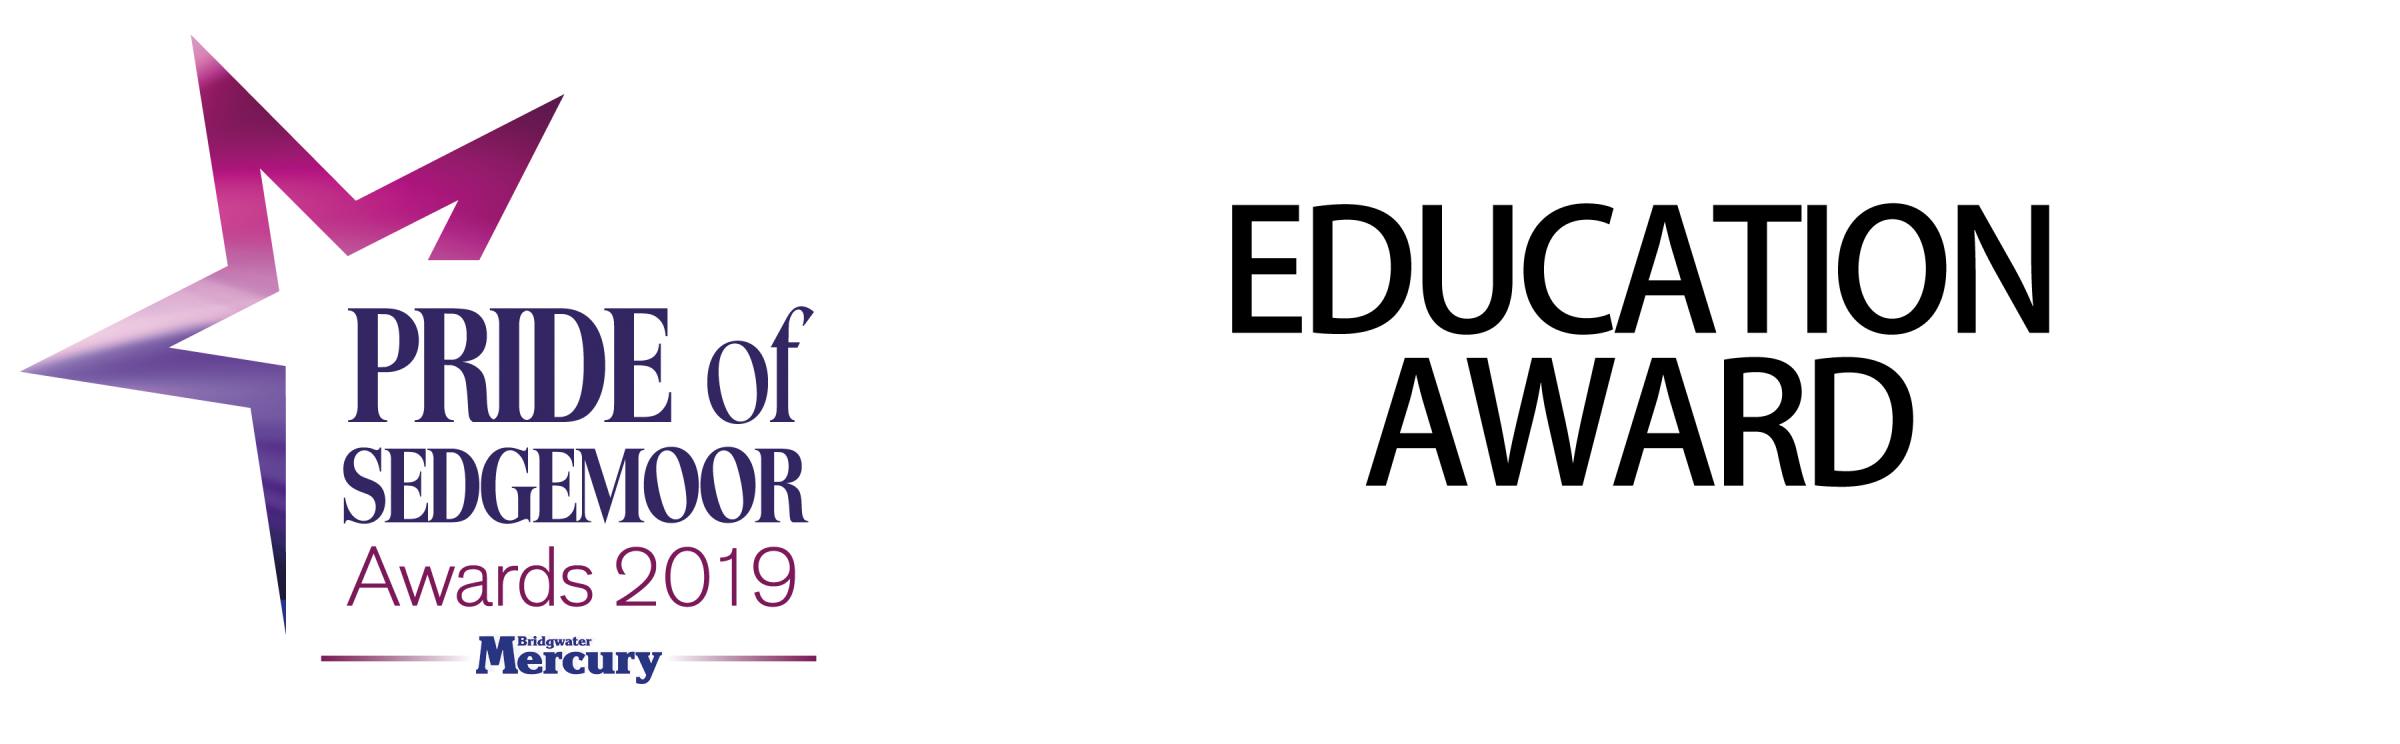 Bridgwater Mercury: Pride of Sedgemoor Awards 2019: Education Award